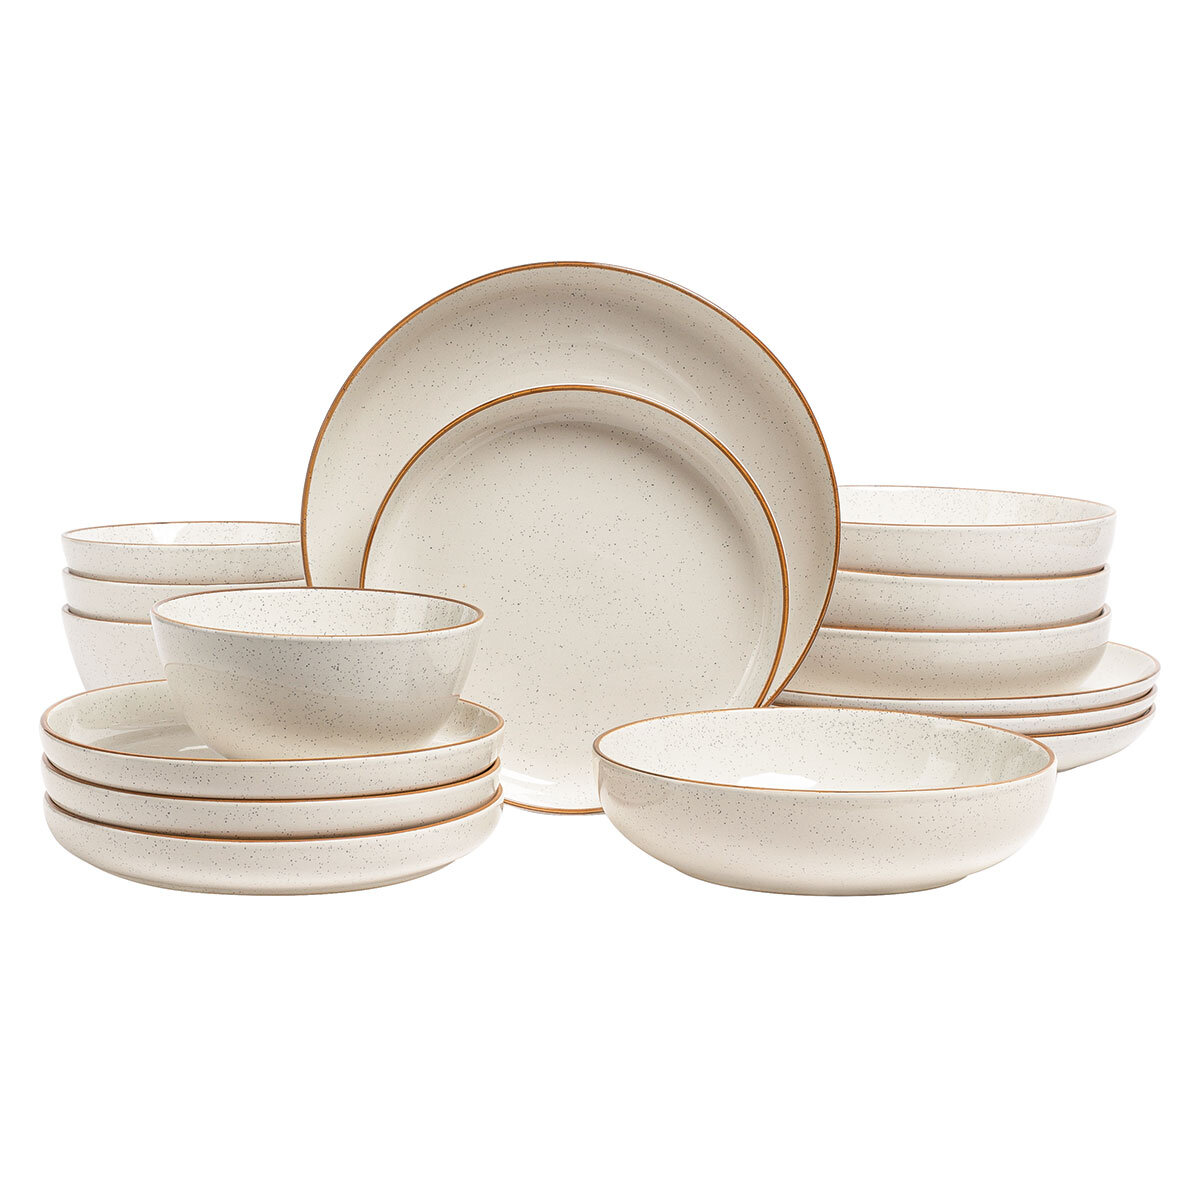 Over & Back Stoneware Dinnerware Set, 16 Piece in White